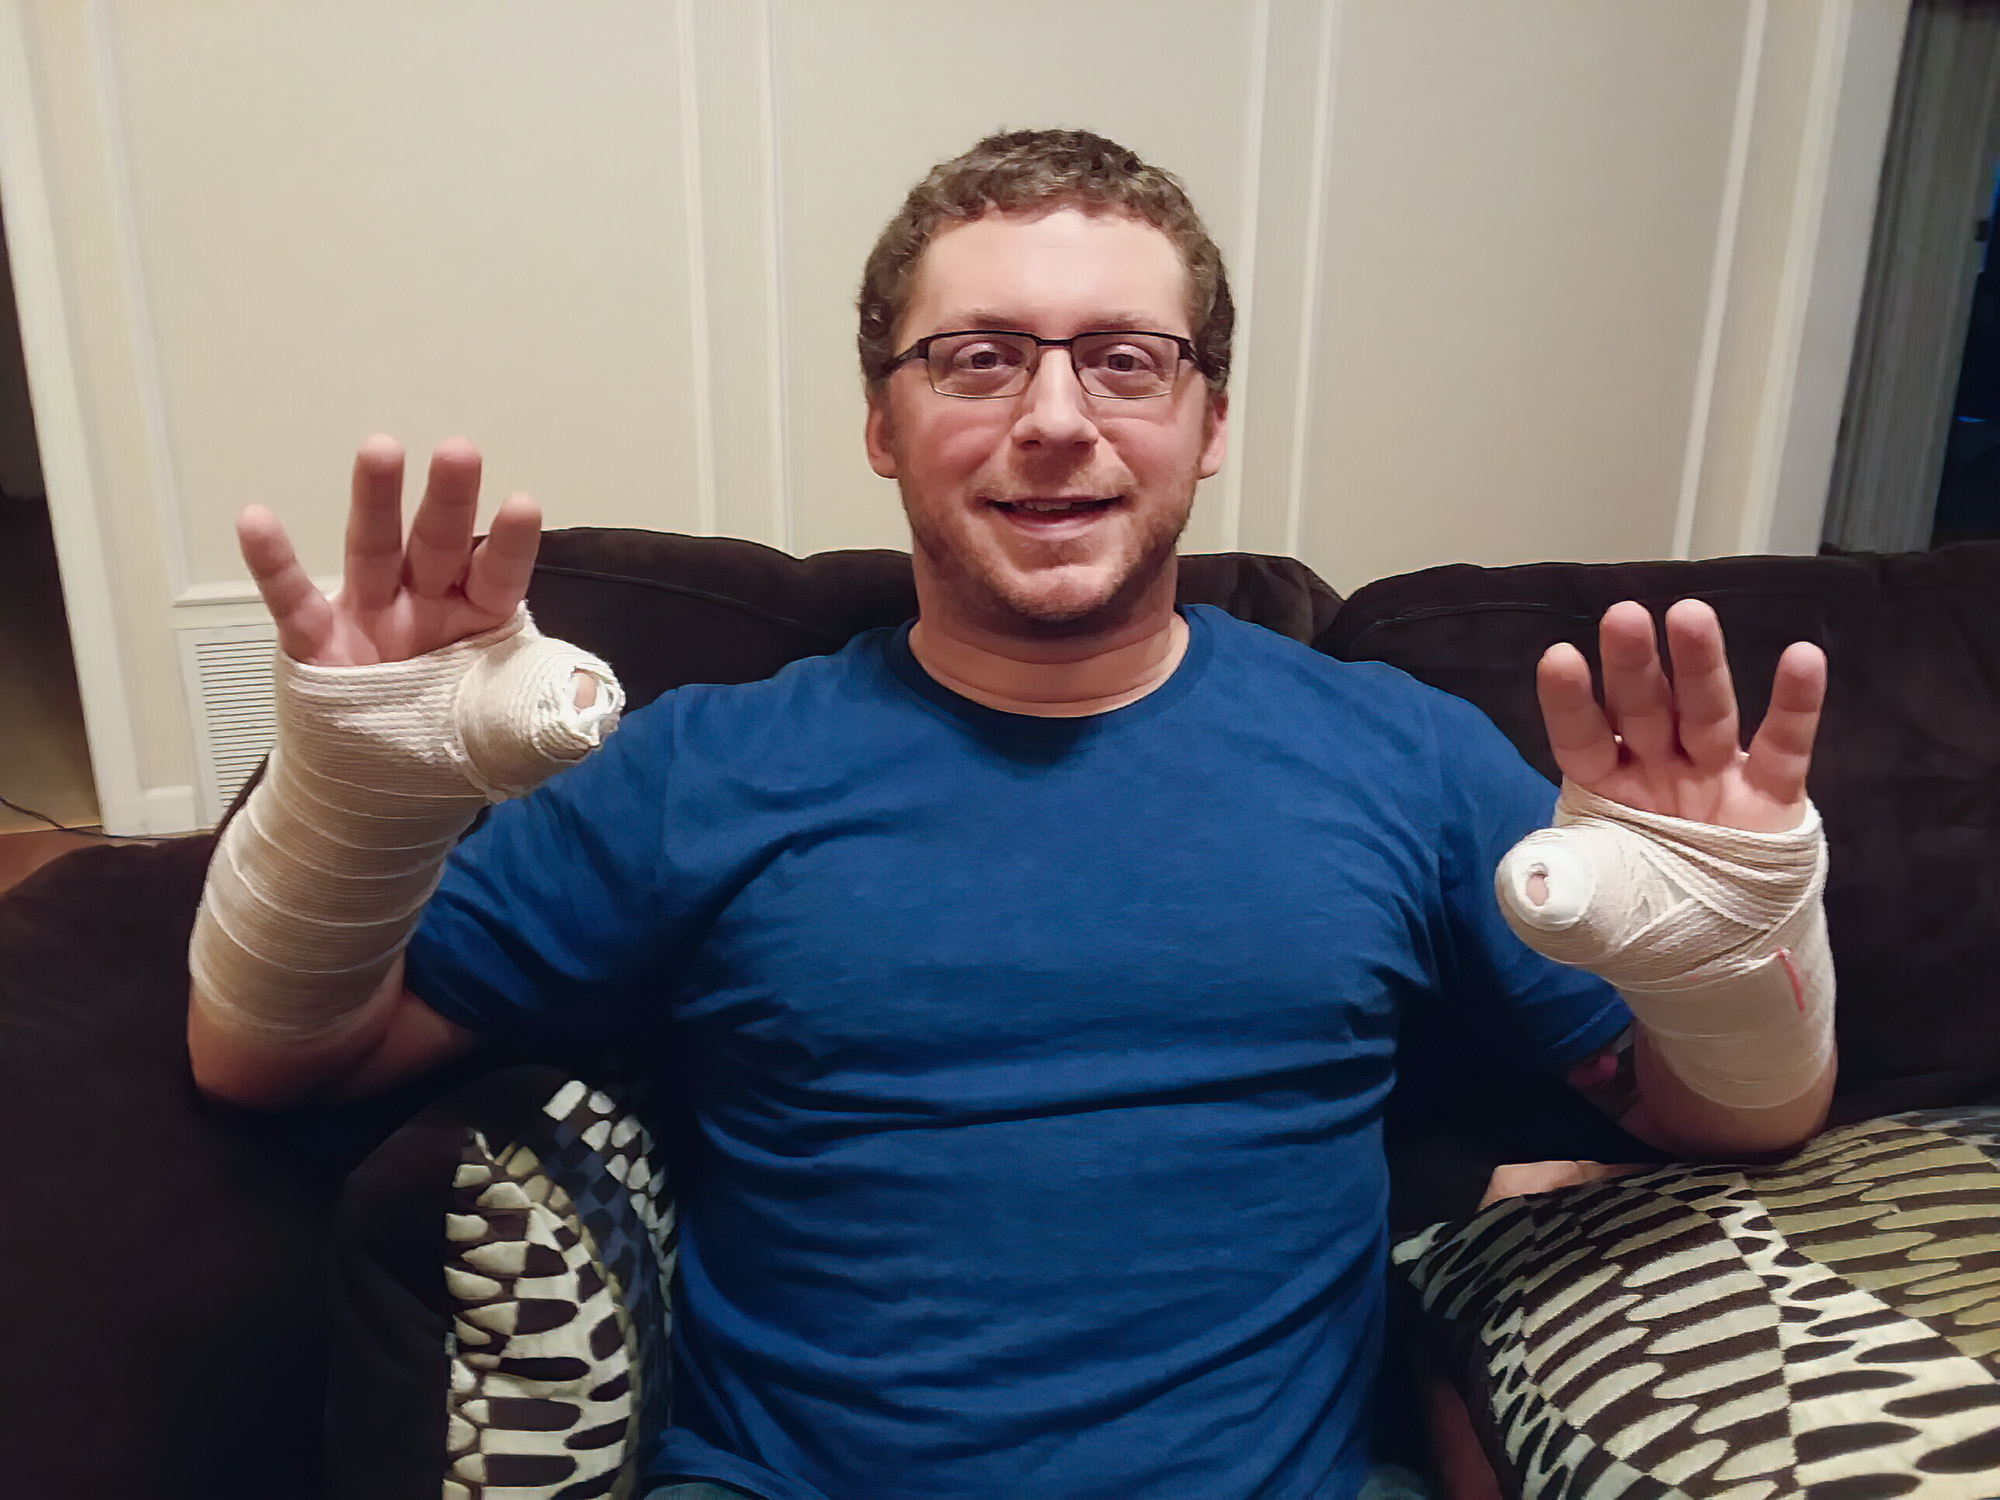 Jake LeGrand with thumbs in splints.